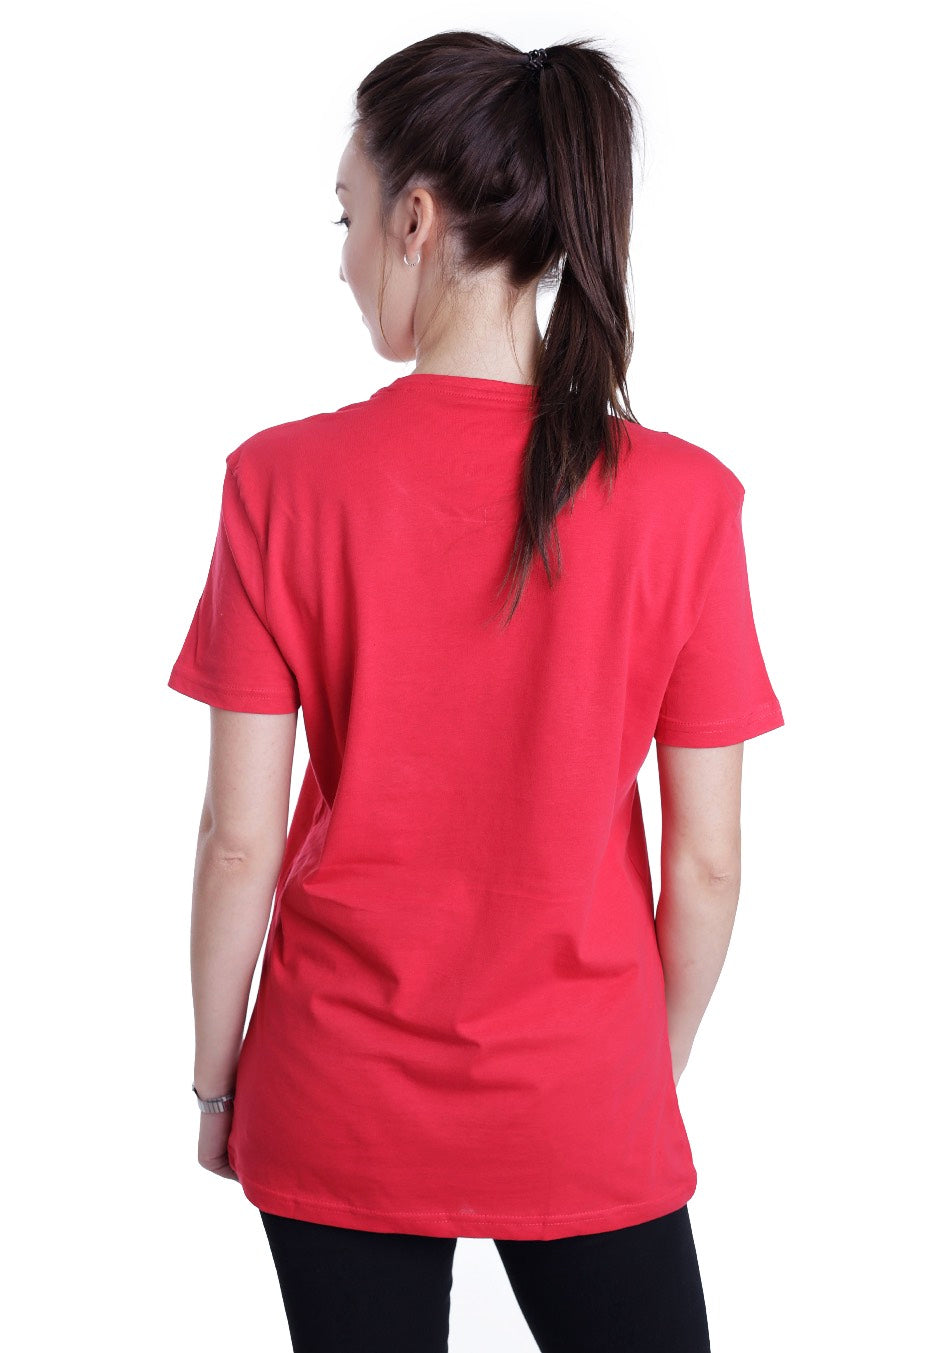 Super Mario - Big M Red - T-Shirt | Women-Image